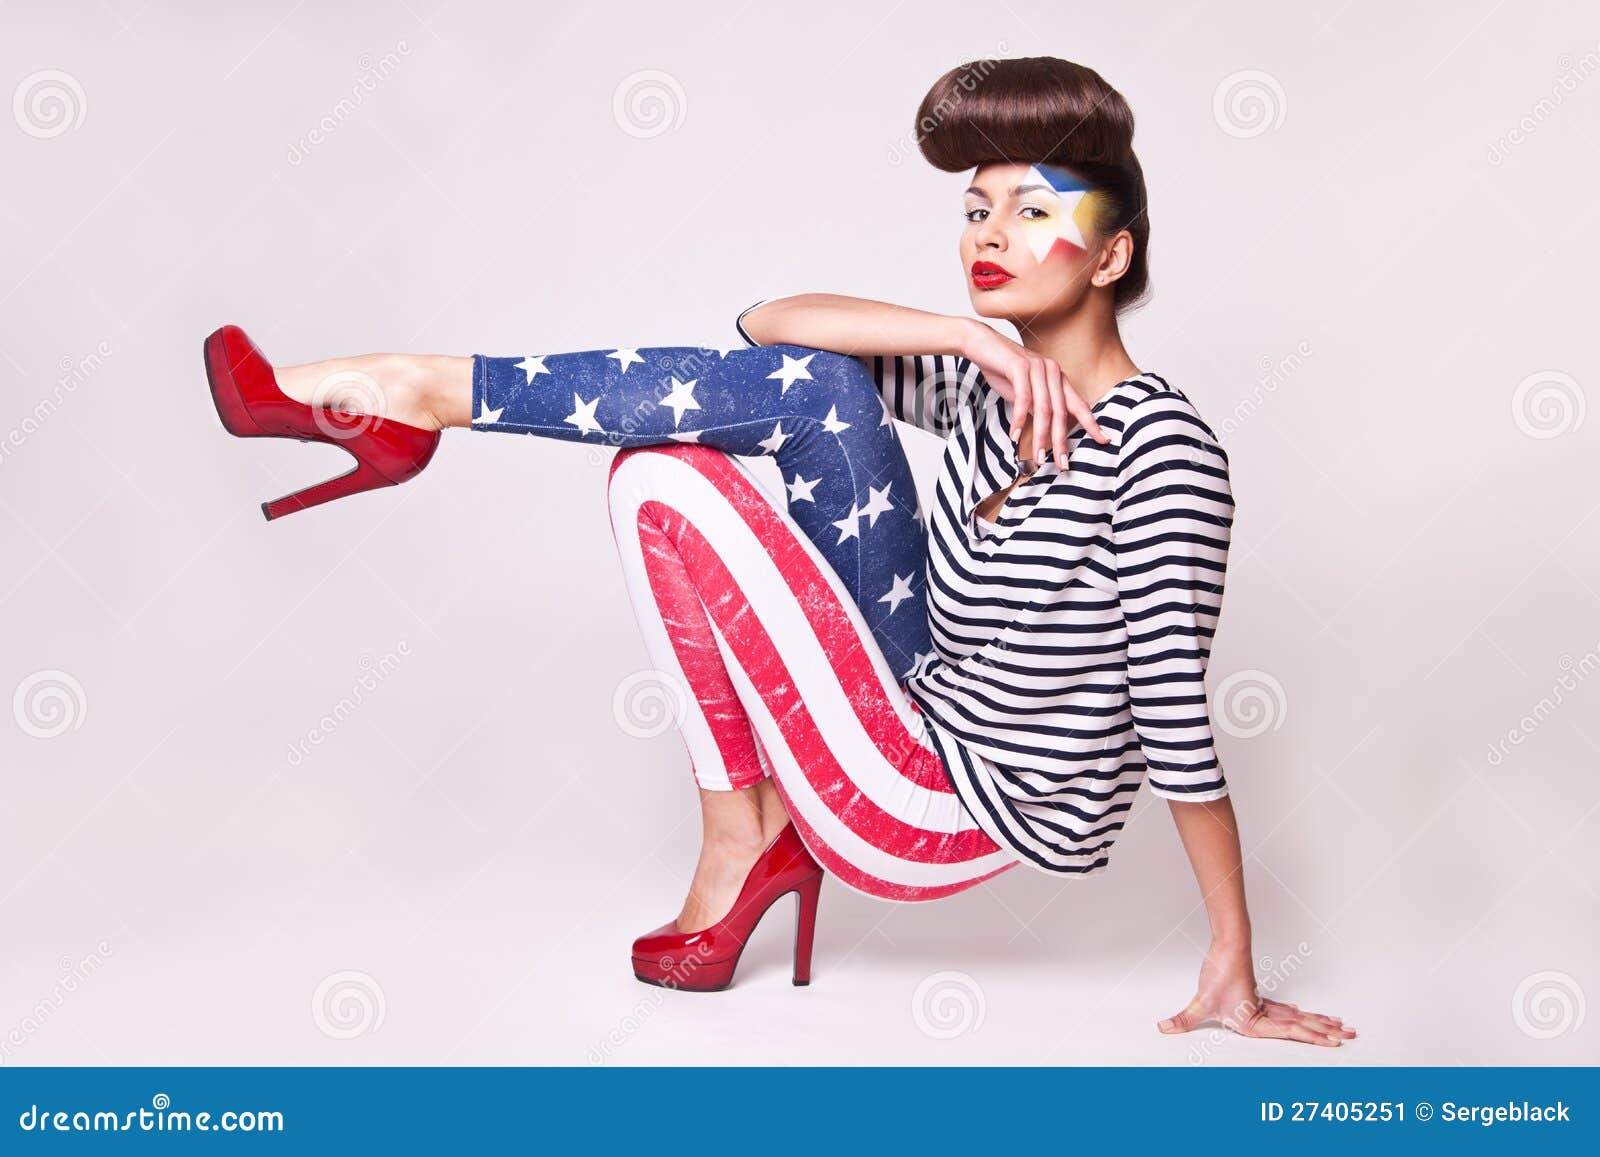 https://thumbs.dreamstime.com/z/fashion-model-american-flag-leggings-27405251.jpg